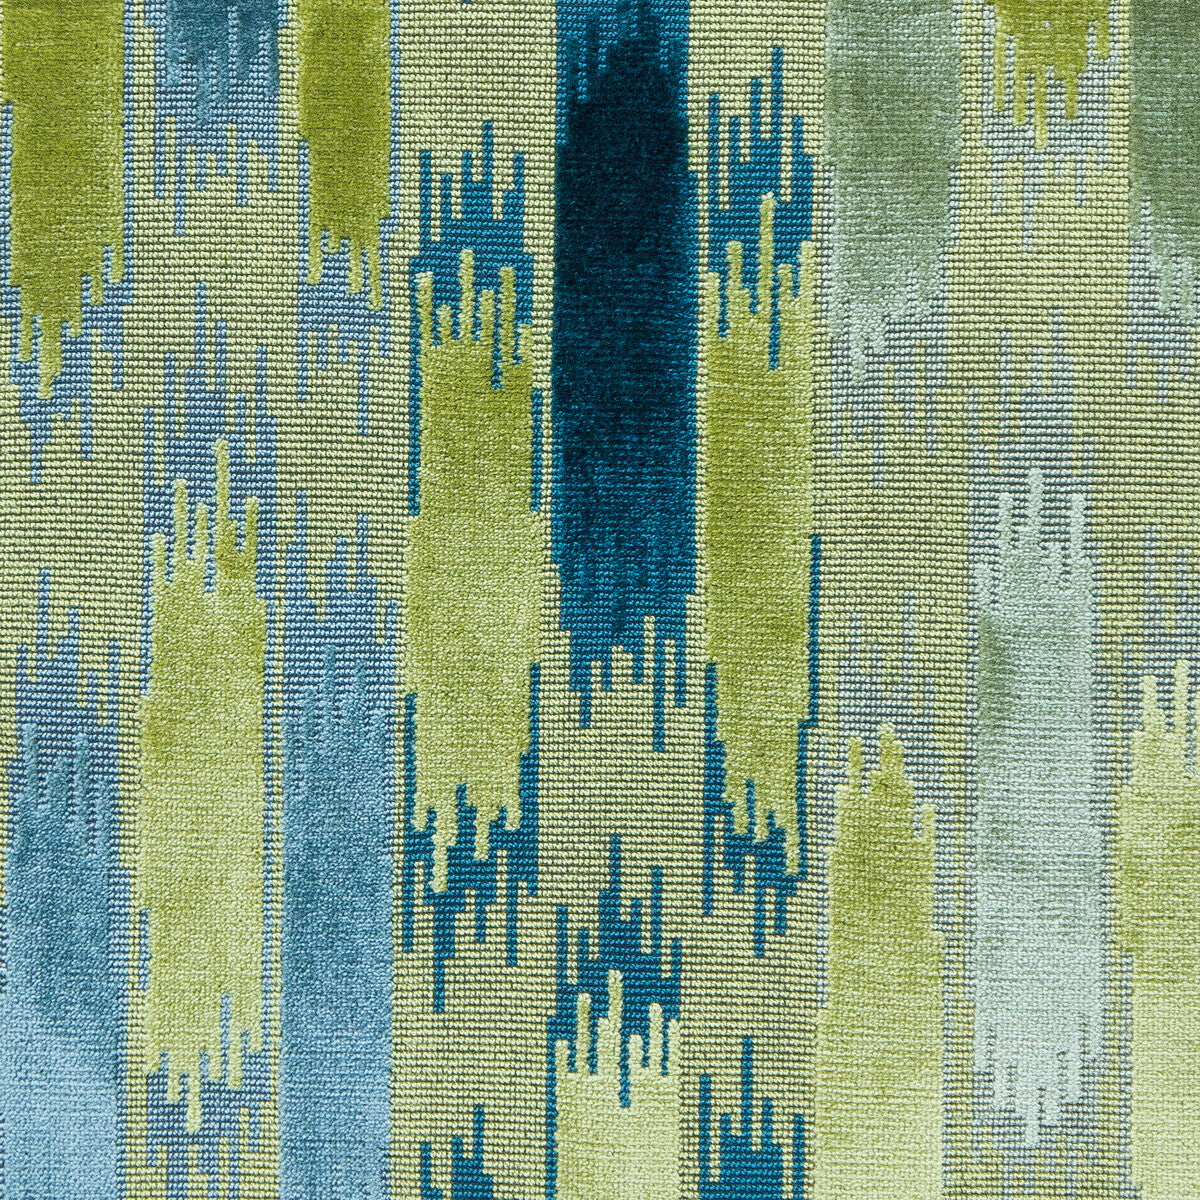 Aragon fabric in lima/azul color - pattern GDT5566.002.0 - by Gaston y Daniela in the Gaston Nuevo Mundo collection